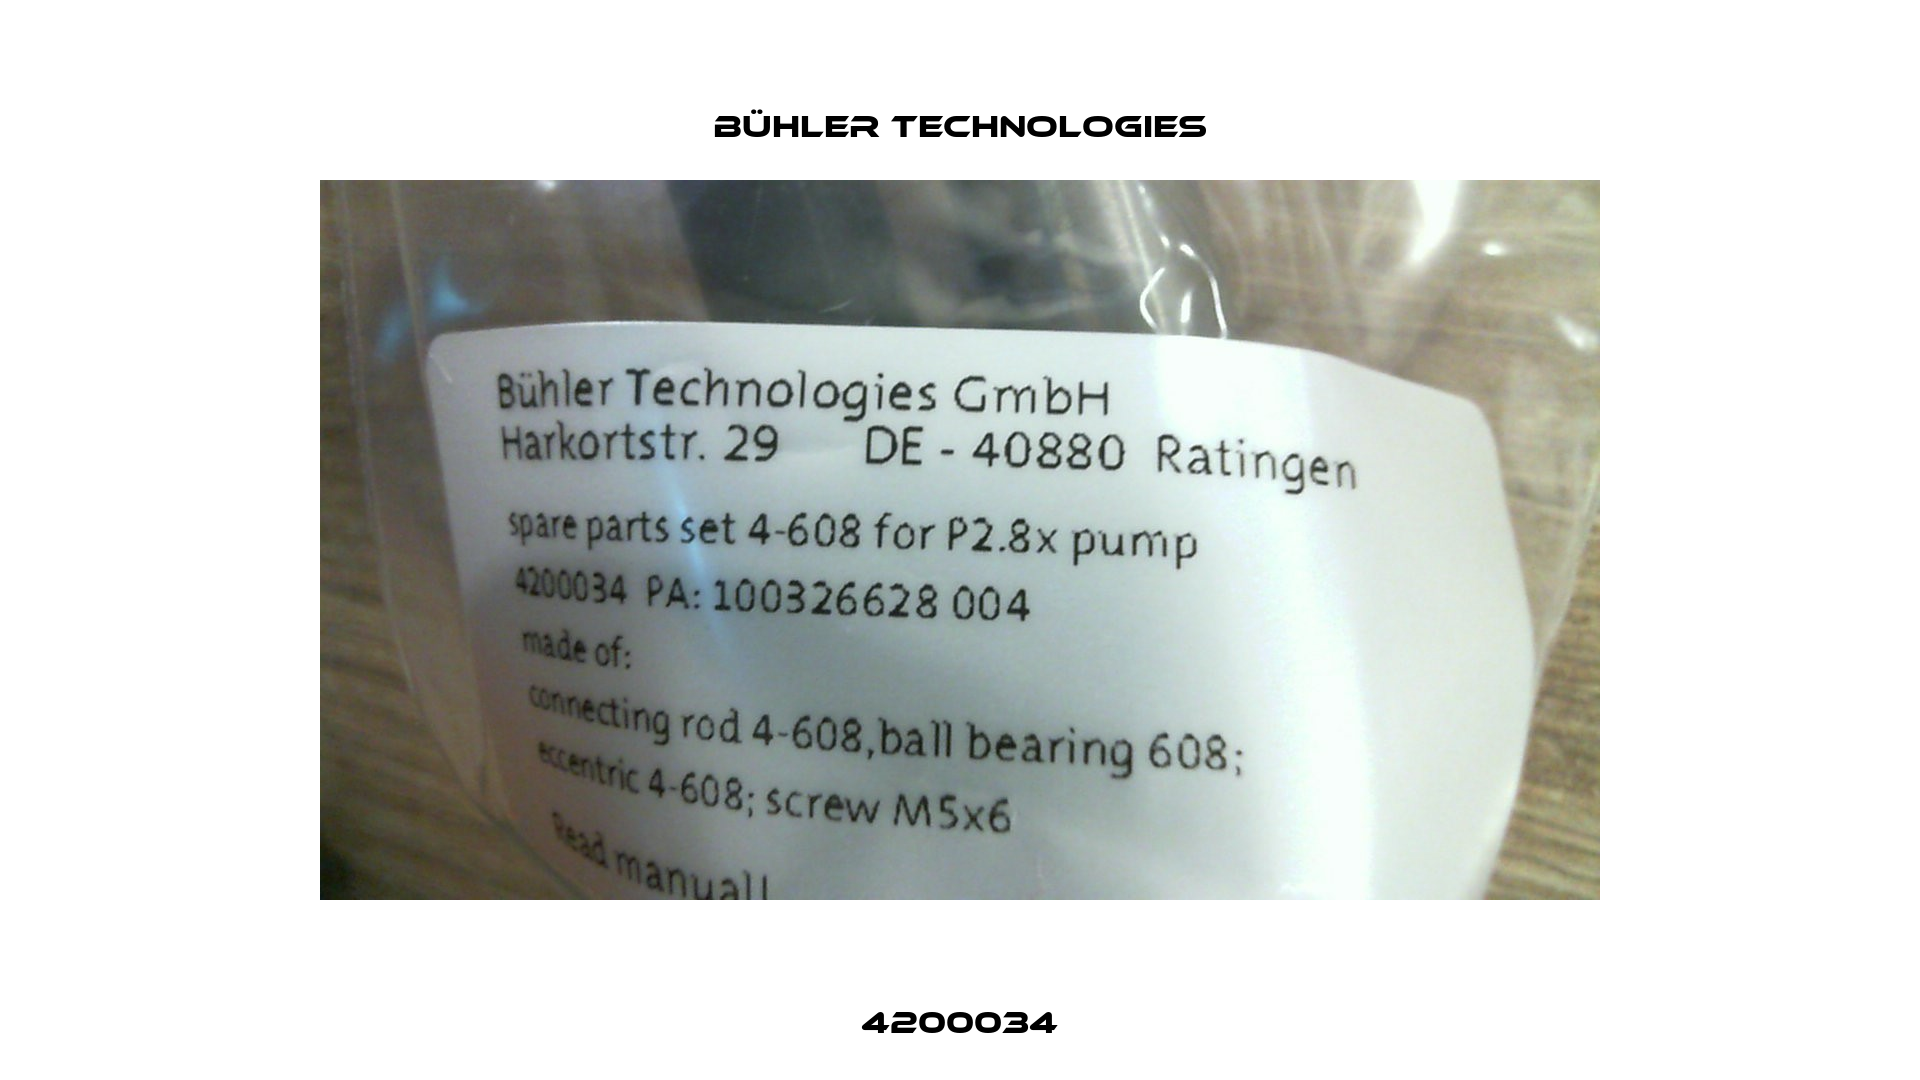 4200034 Bühler Technologies